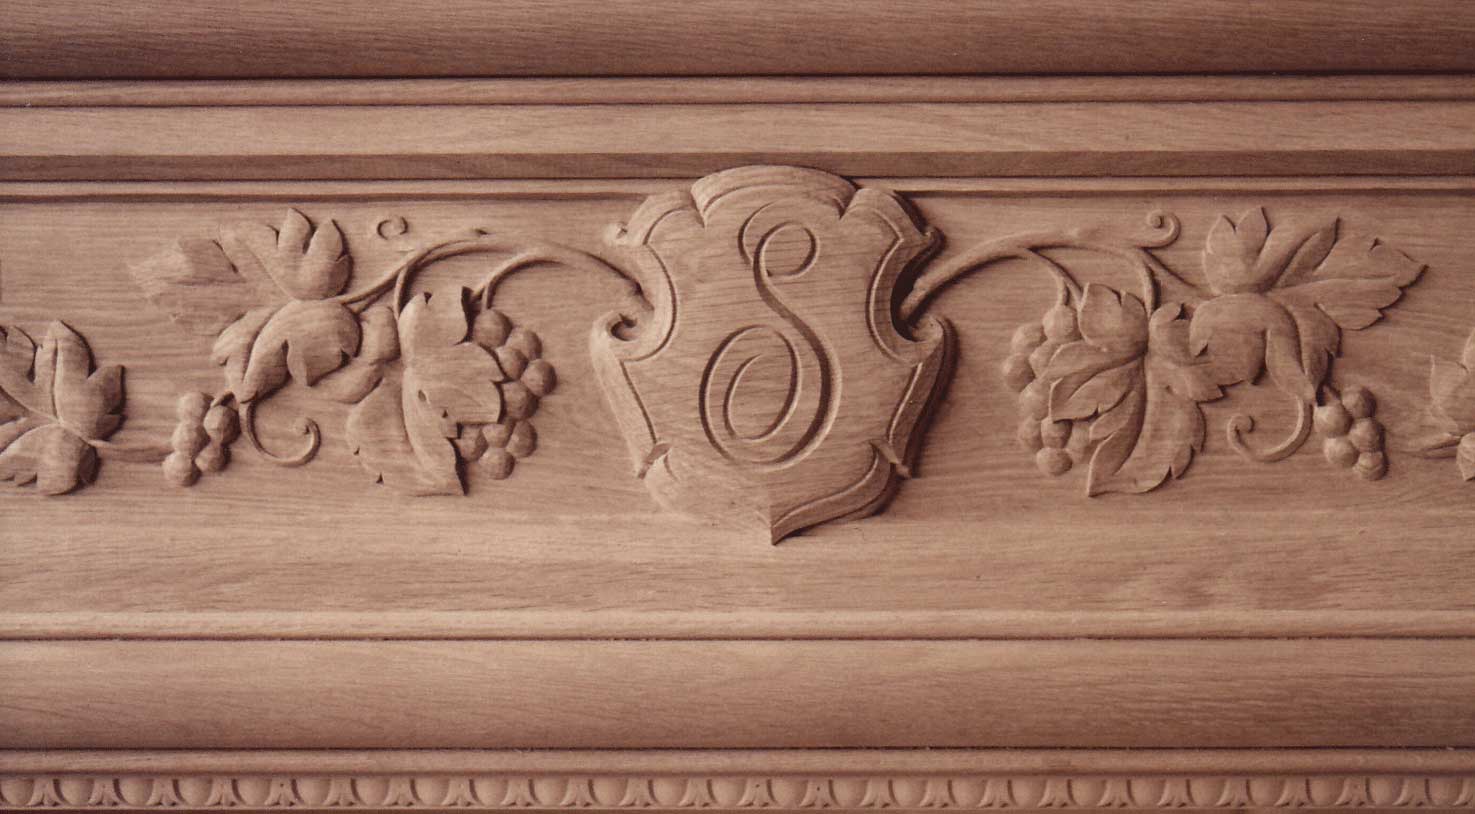 detail shot of S monogram in wood